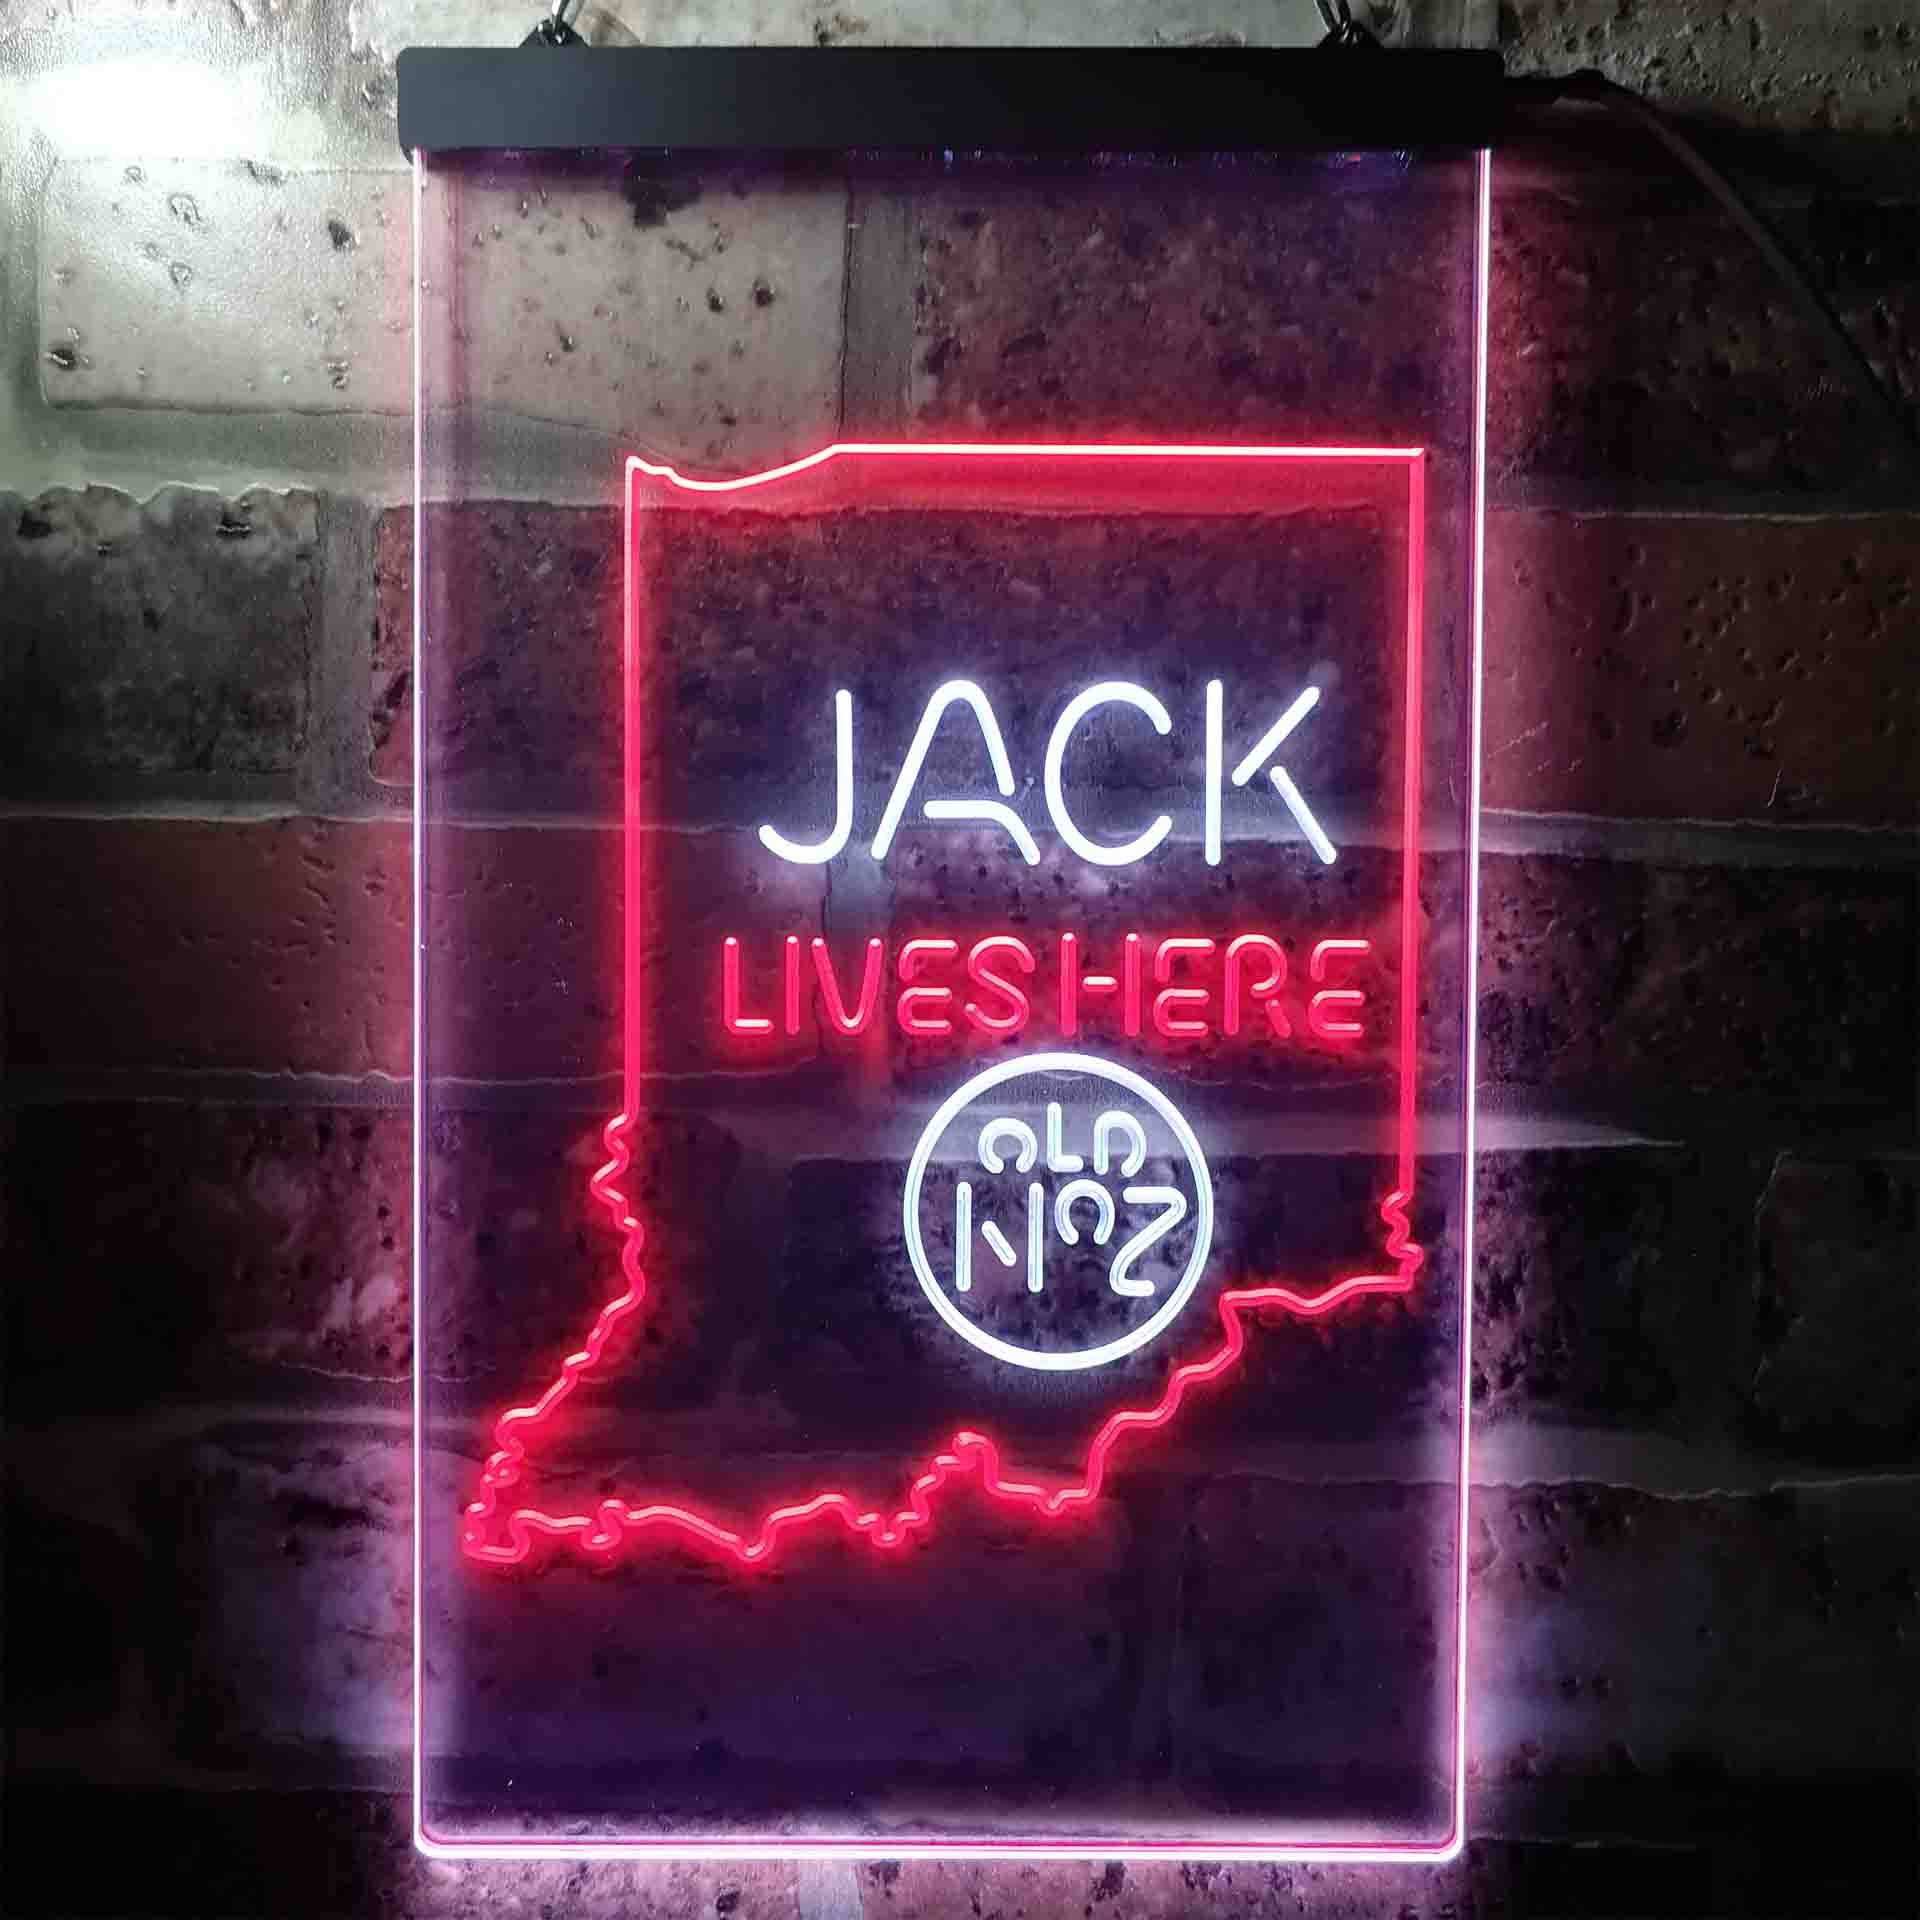 Indiana Jack Lives Here Neon LED Sign